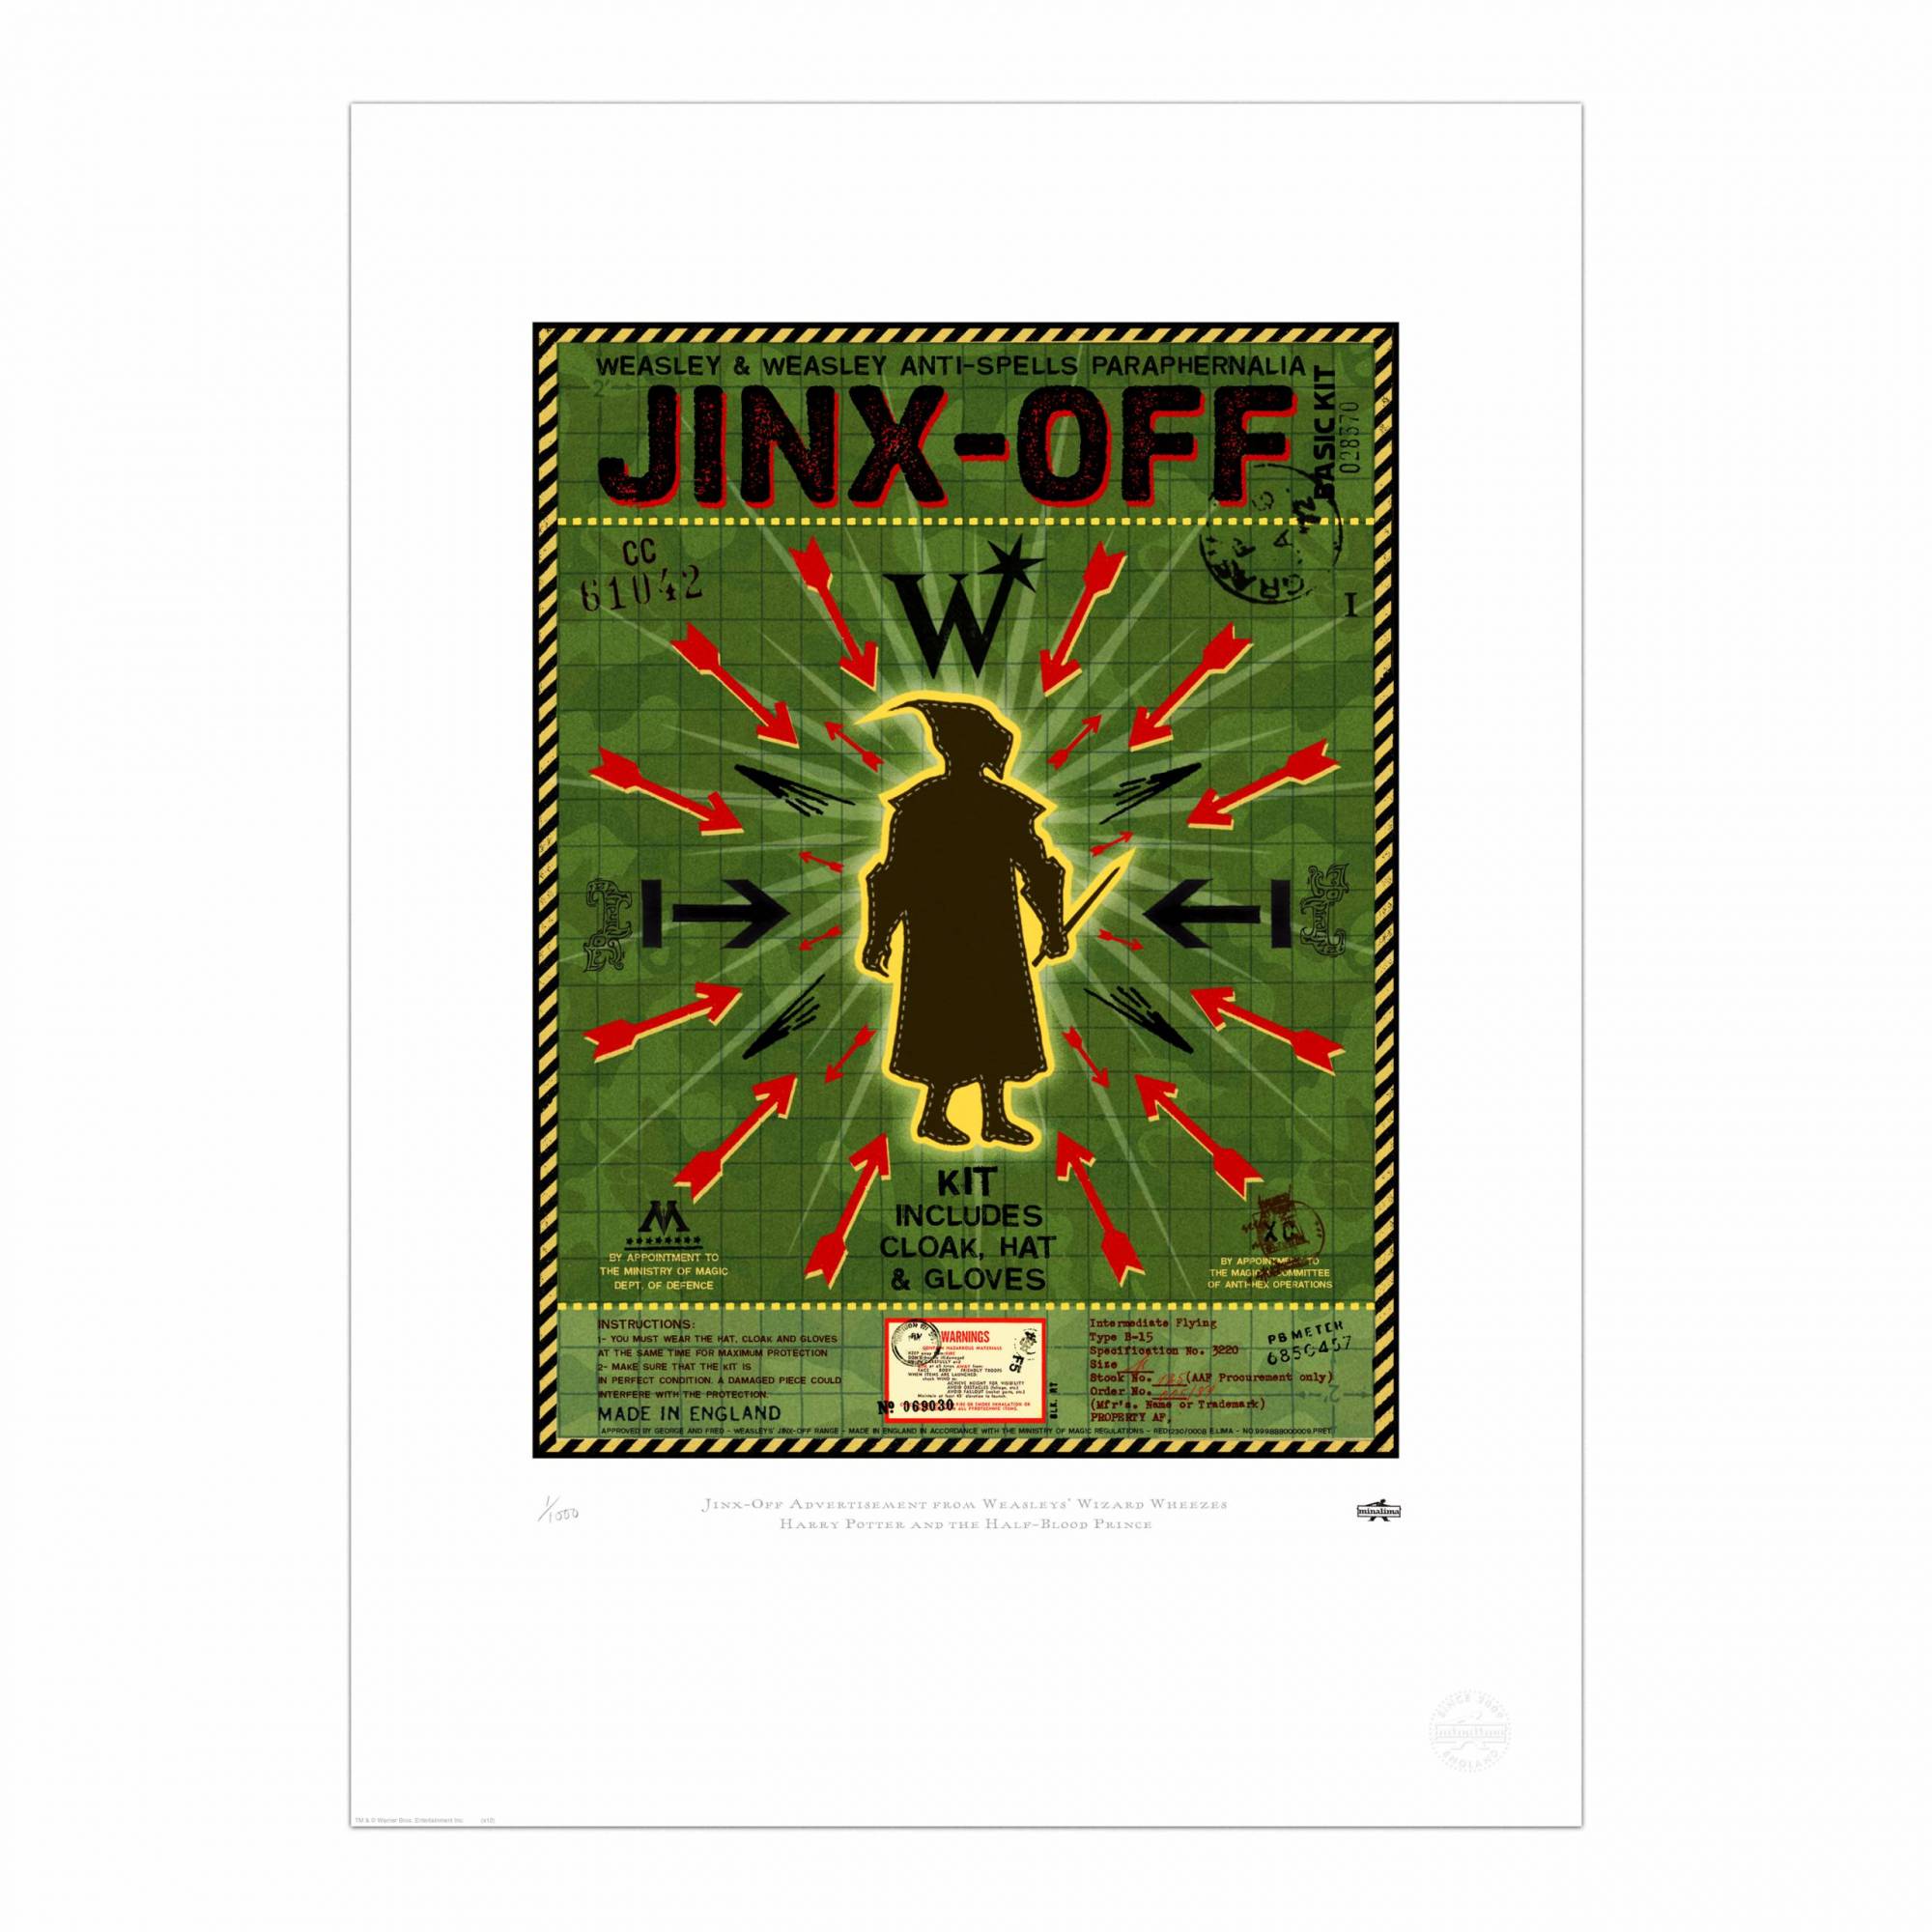 Wizard　From　Advertisement　Jinx-off　MinaLima　Weasleys'　Wheezes